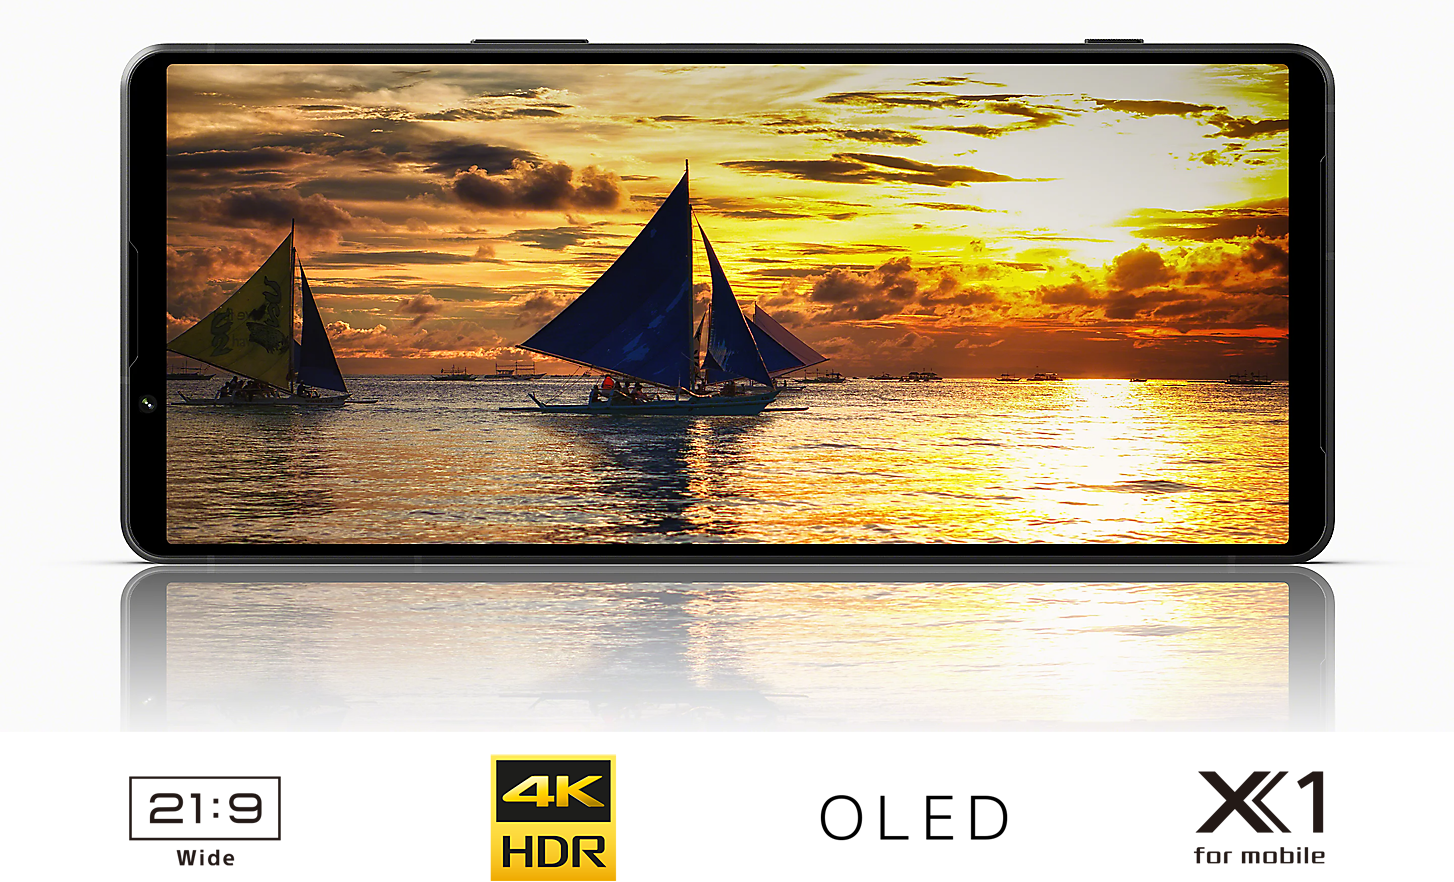 一部 Xperia 1V 正在顯示夕陽下的一艘帆船，下方是 21:9 寬螢幕、4K HDR、OLED、X1 for mobile 的標誌